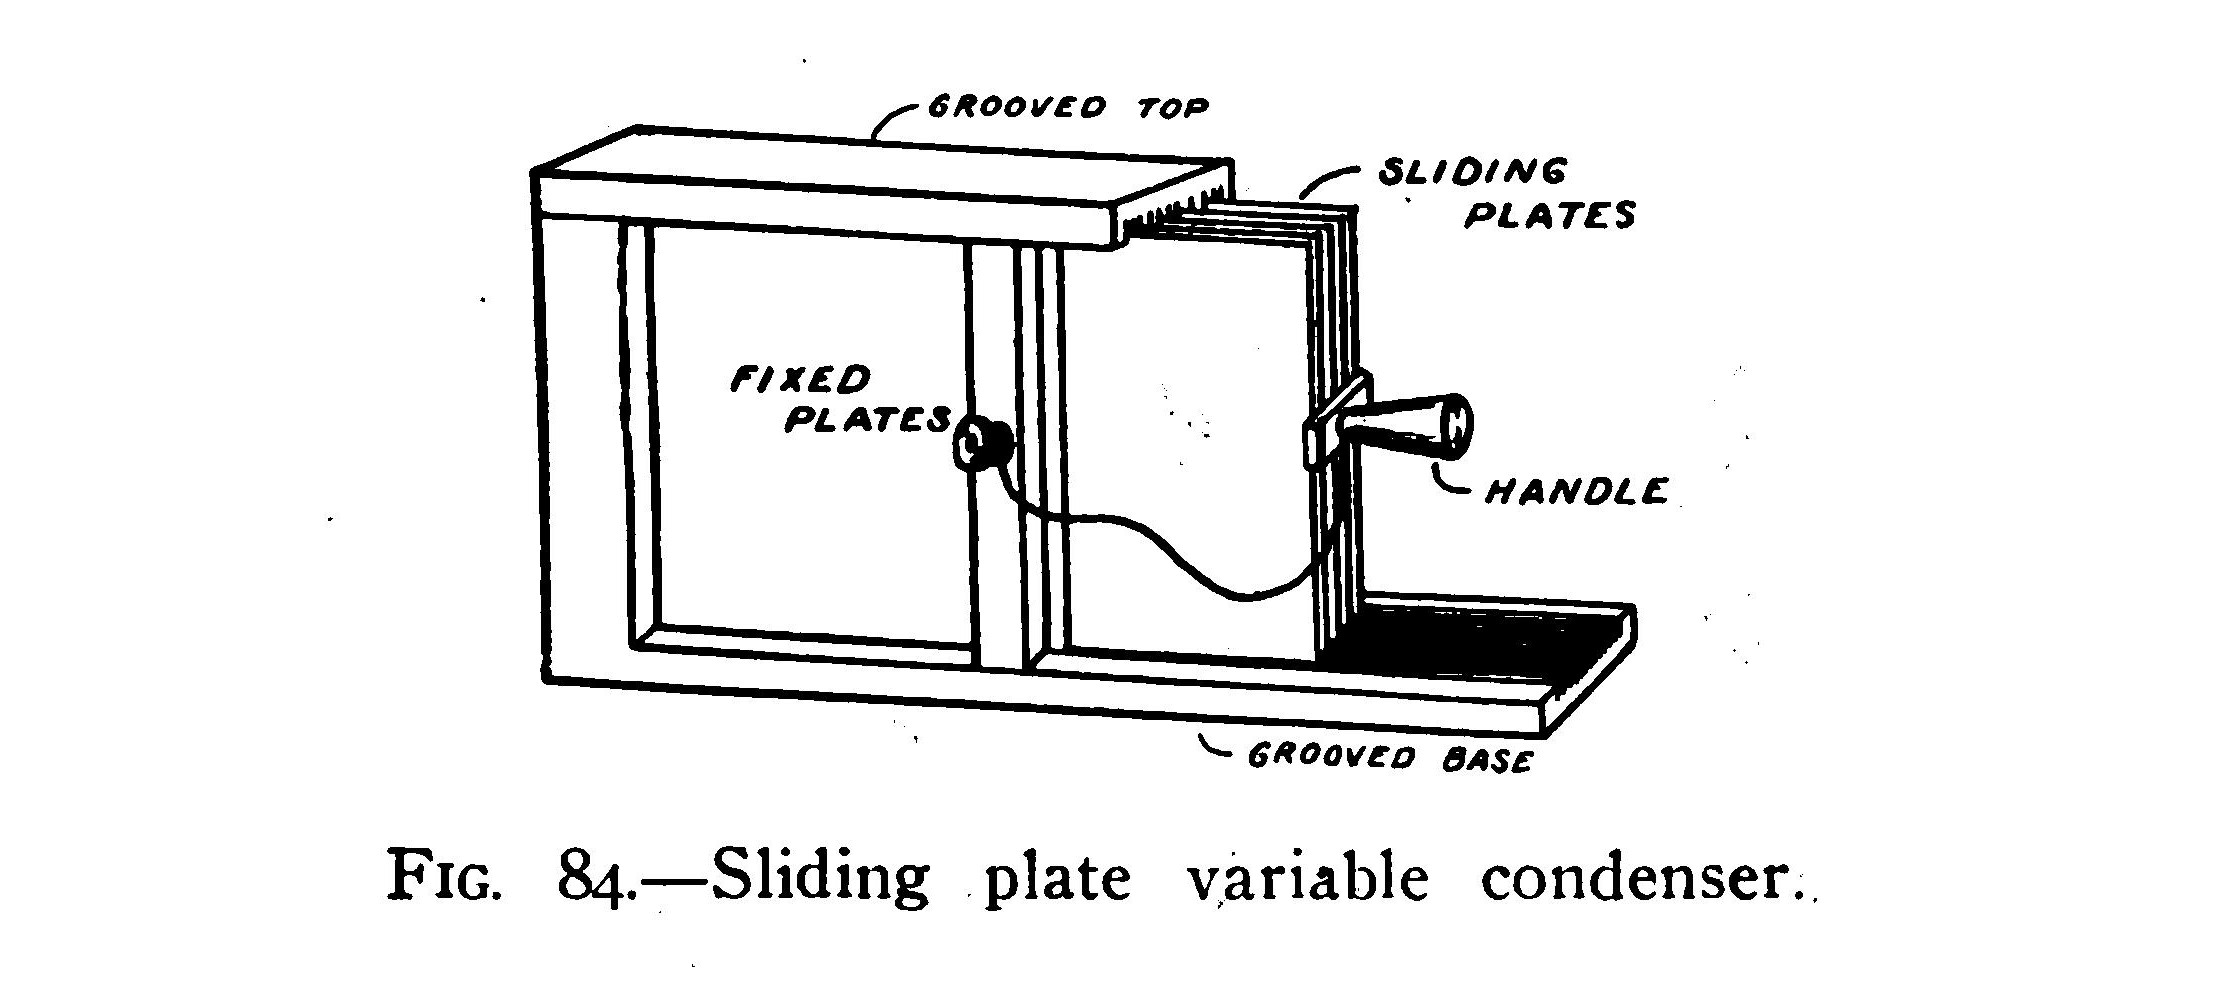 FIG. 84.—Sliding plate variable condenser.